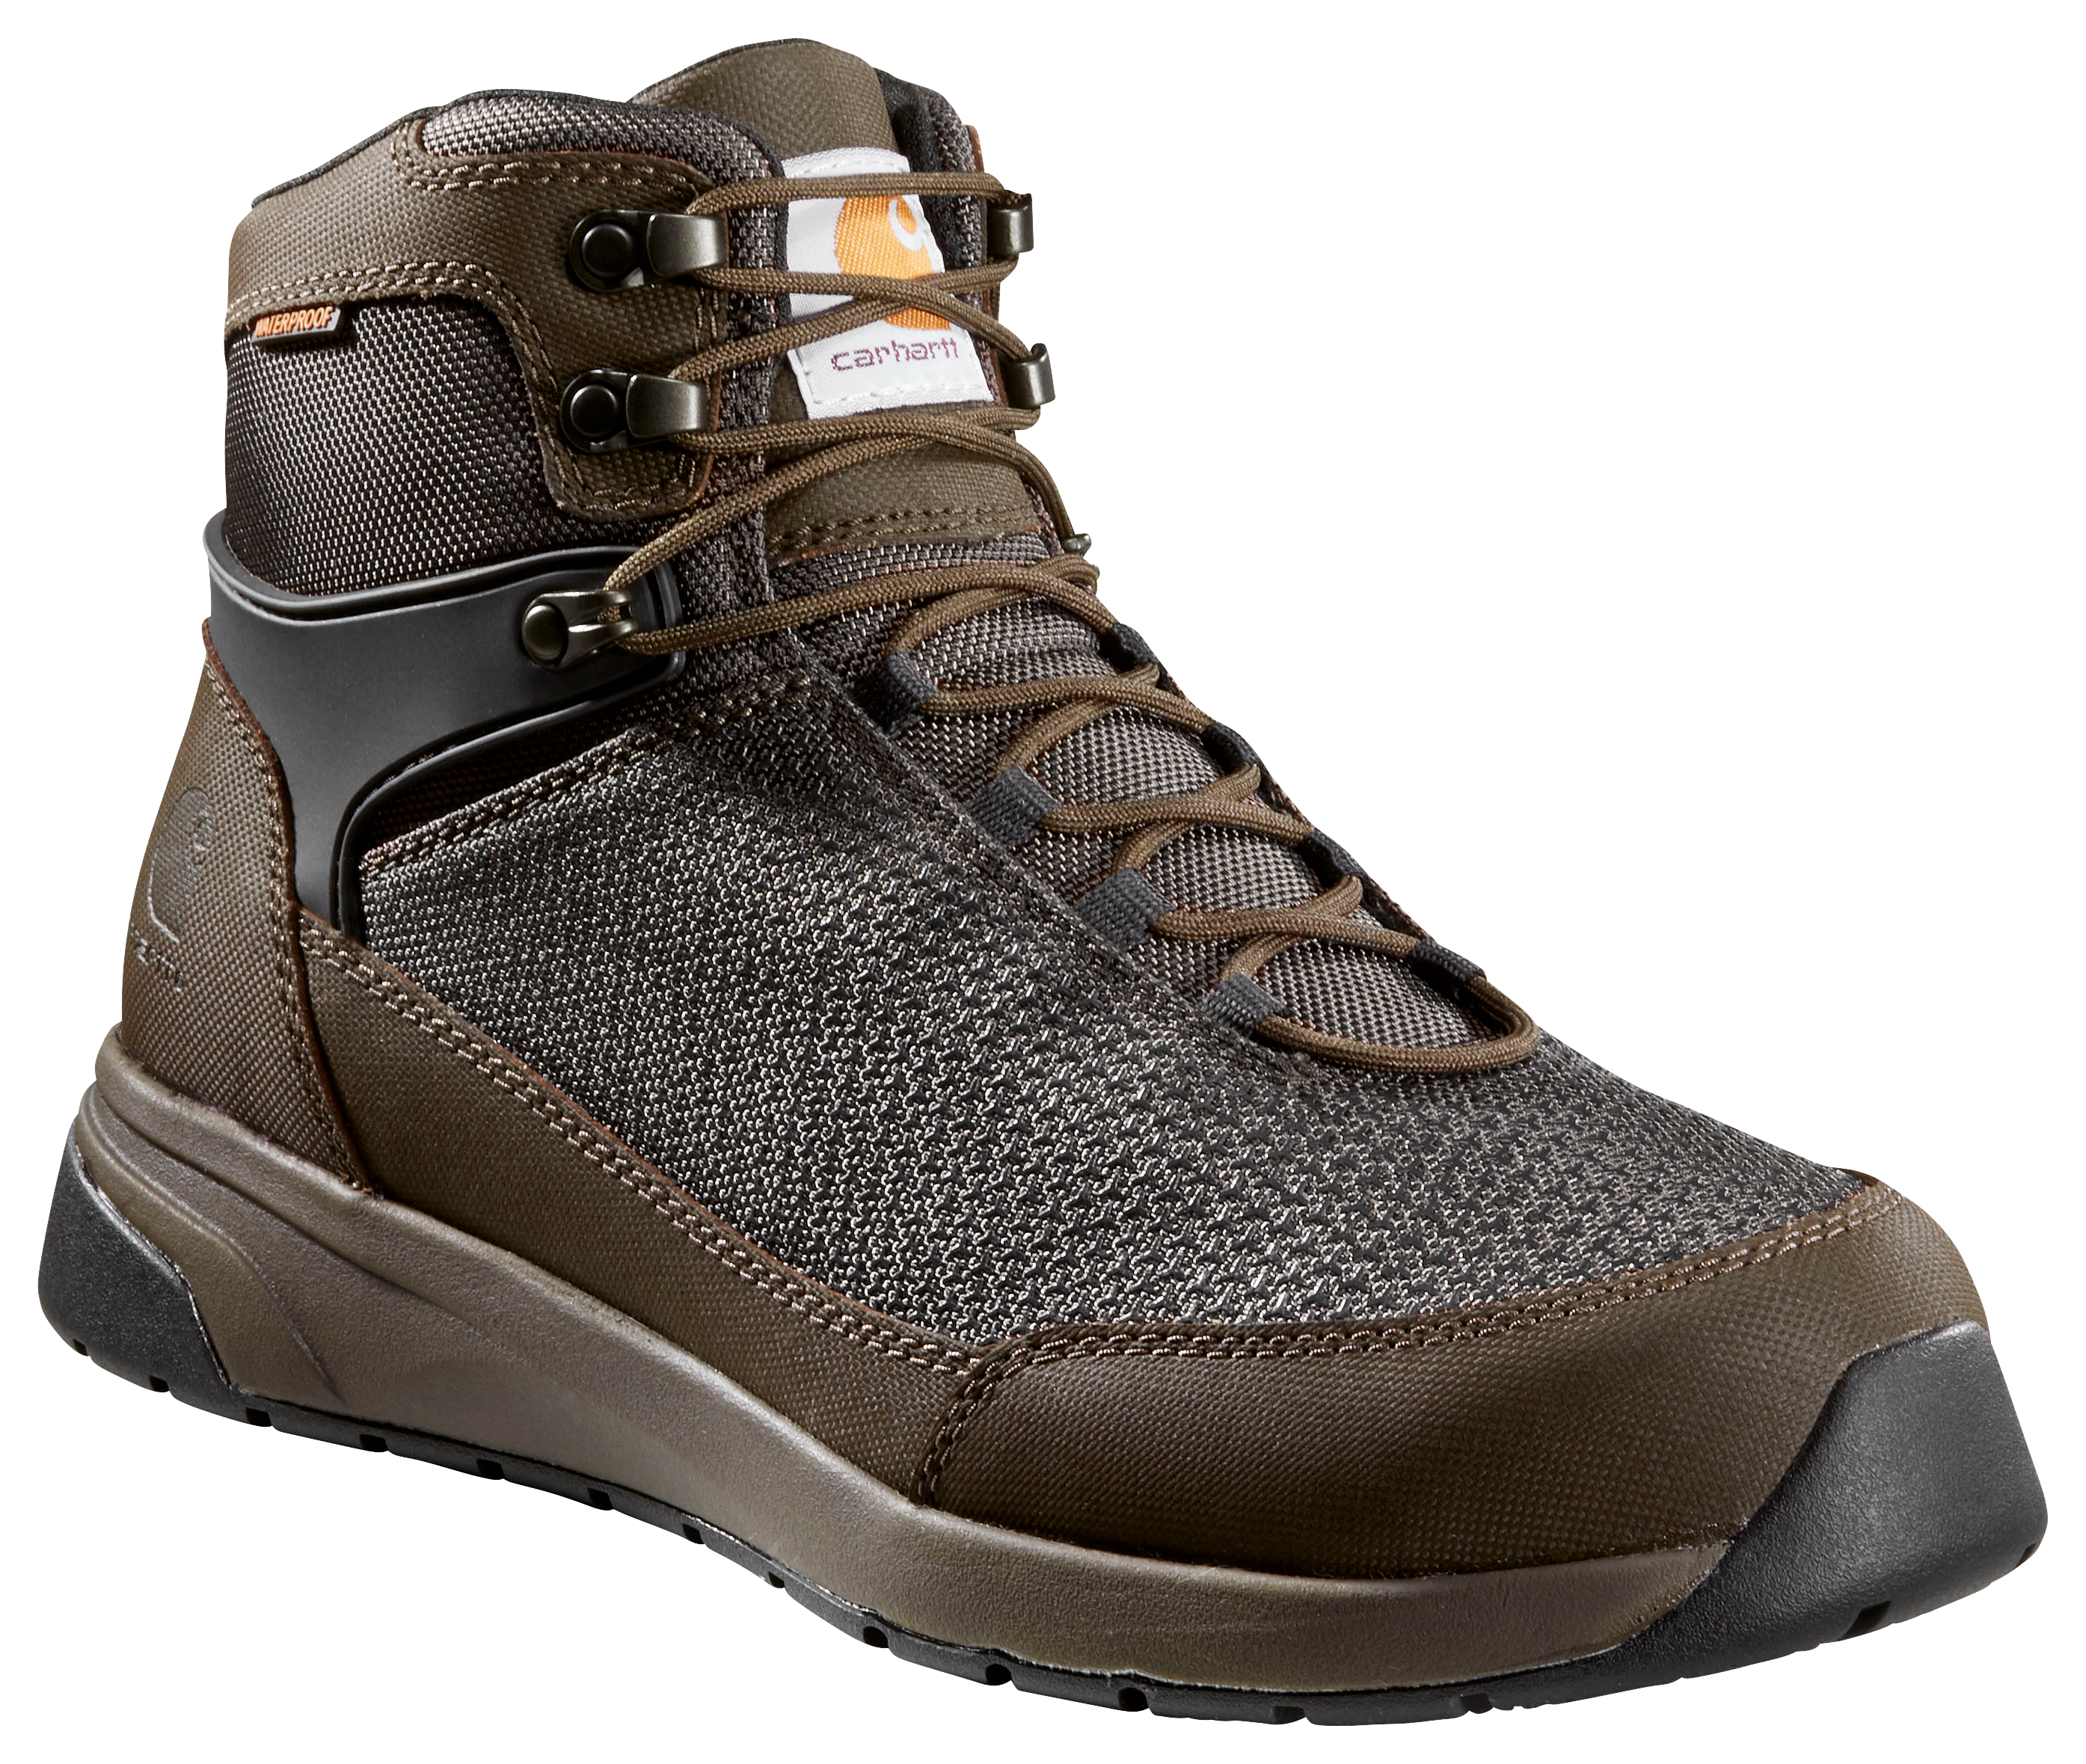 Carhartt Force 6"" Nano Composite-Toe Work Boots for Men - Espresso - 9.5M